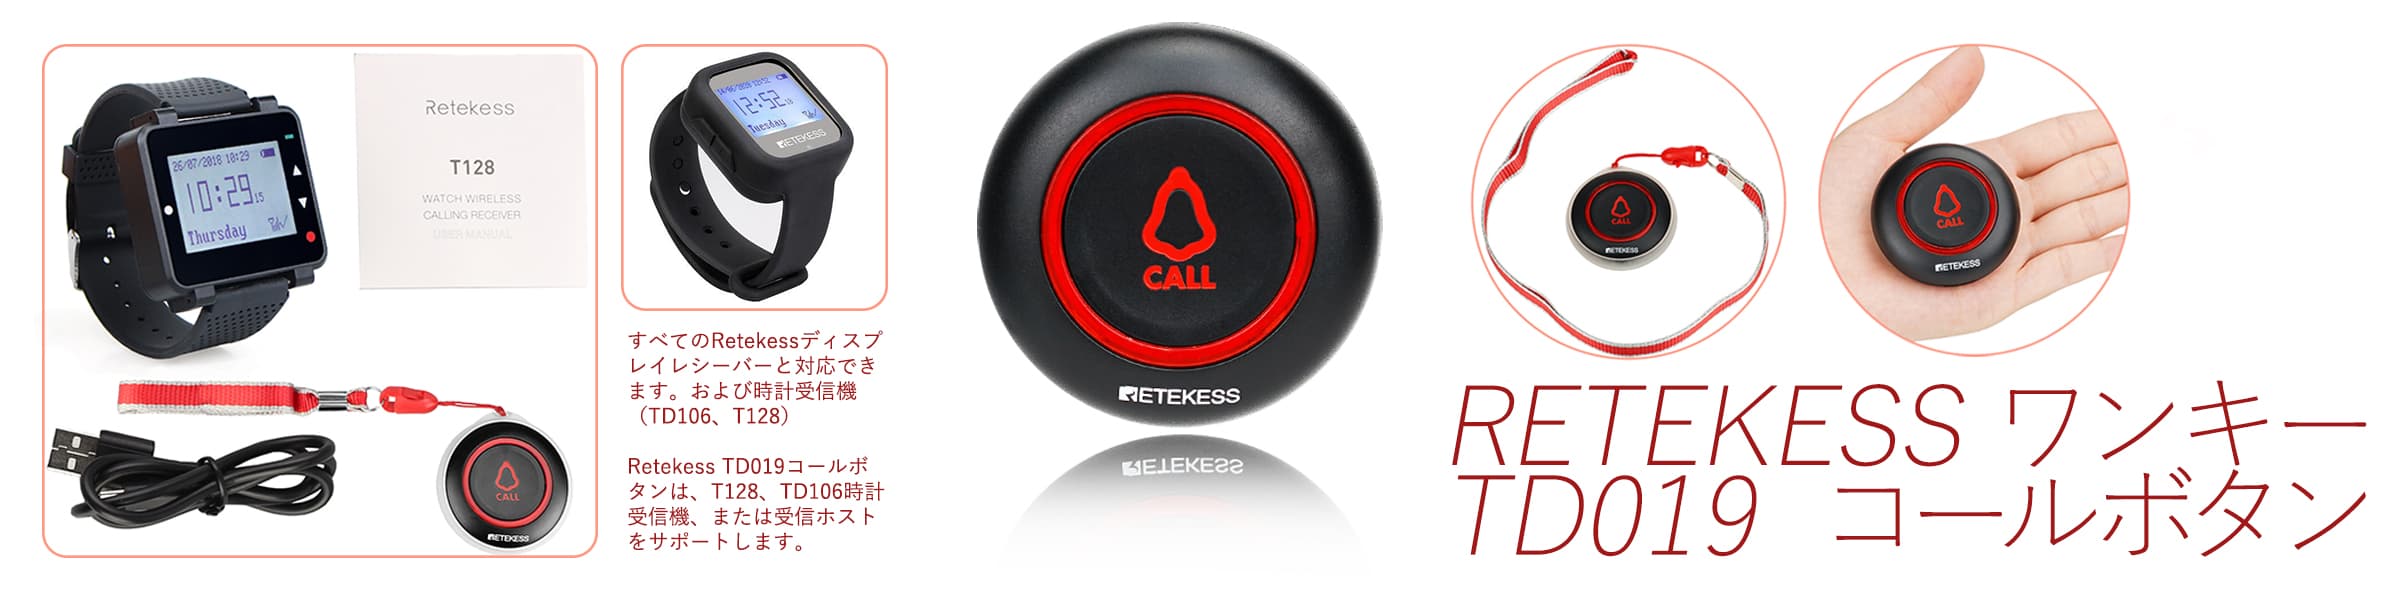 retekess-td019-ワンキーコールボタン-2